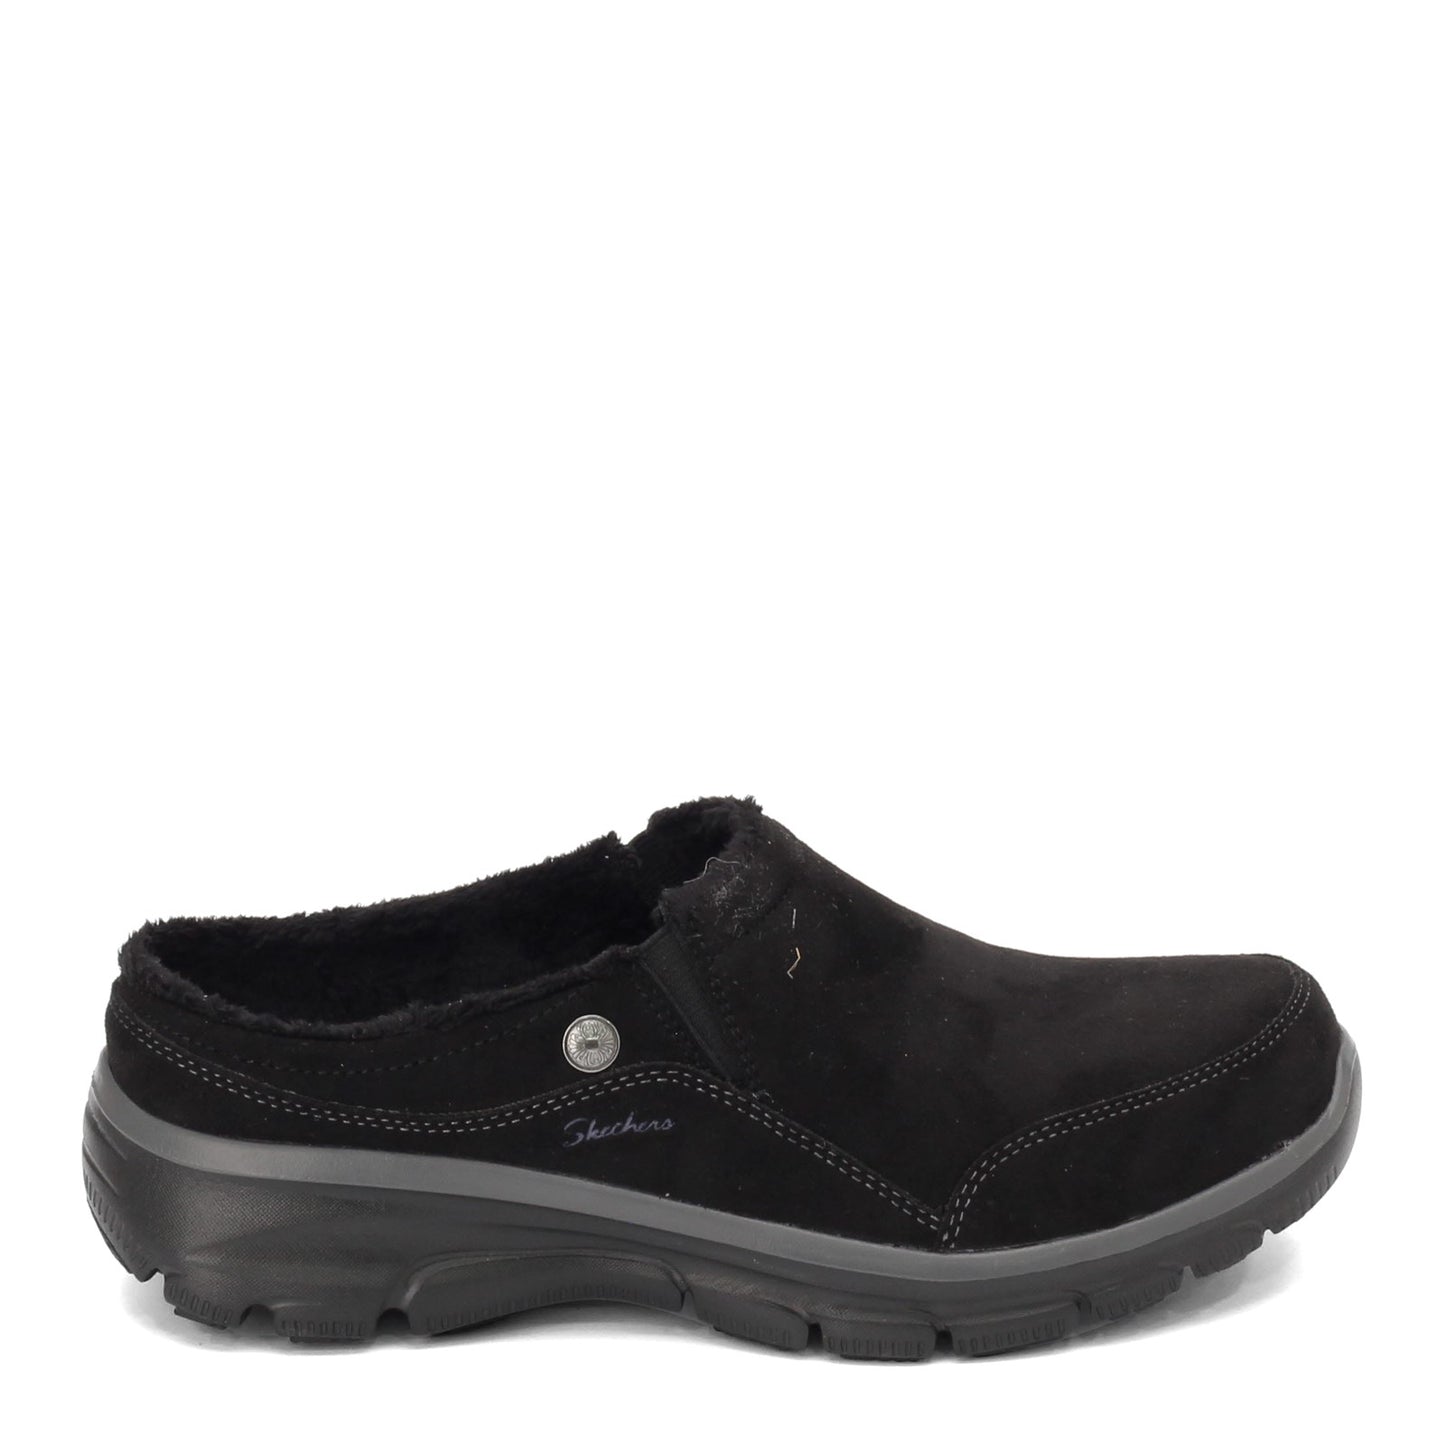 Peltz Shoes  Women's Skechers Relaxed Fit: Easy Going Clog BLACK 49532-BLK